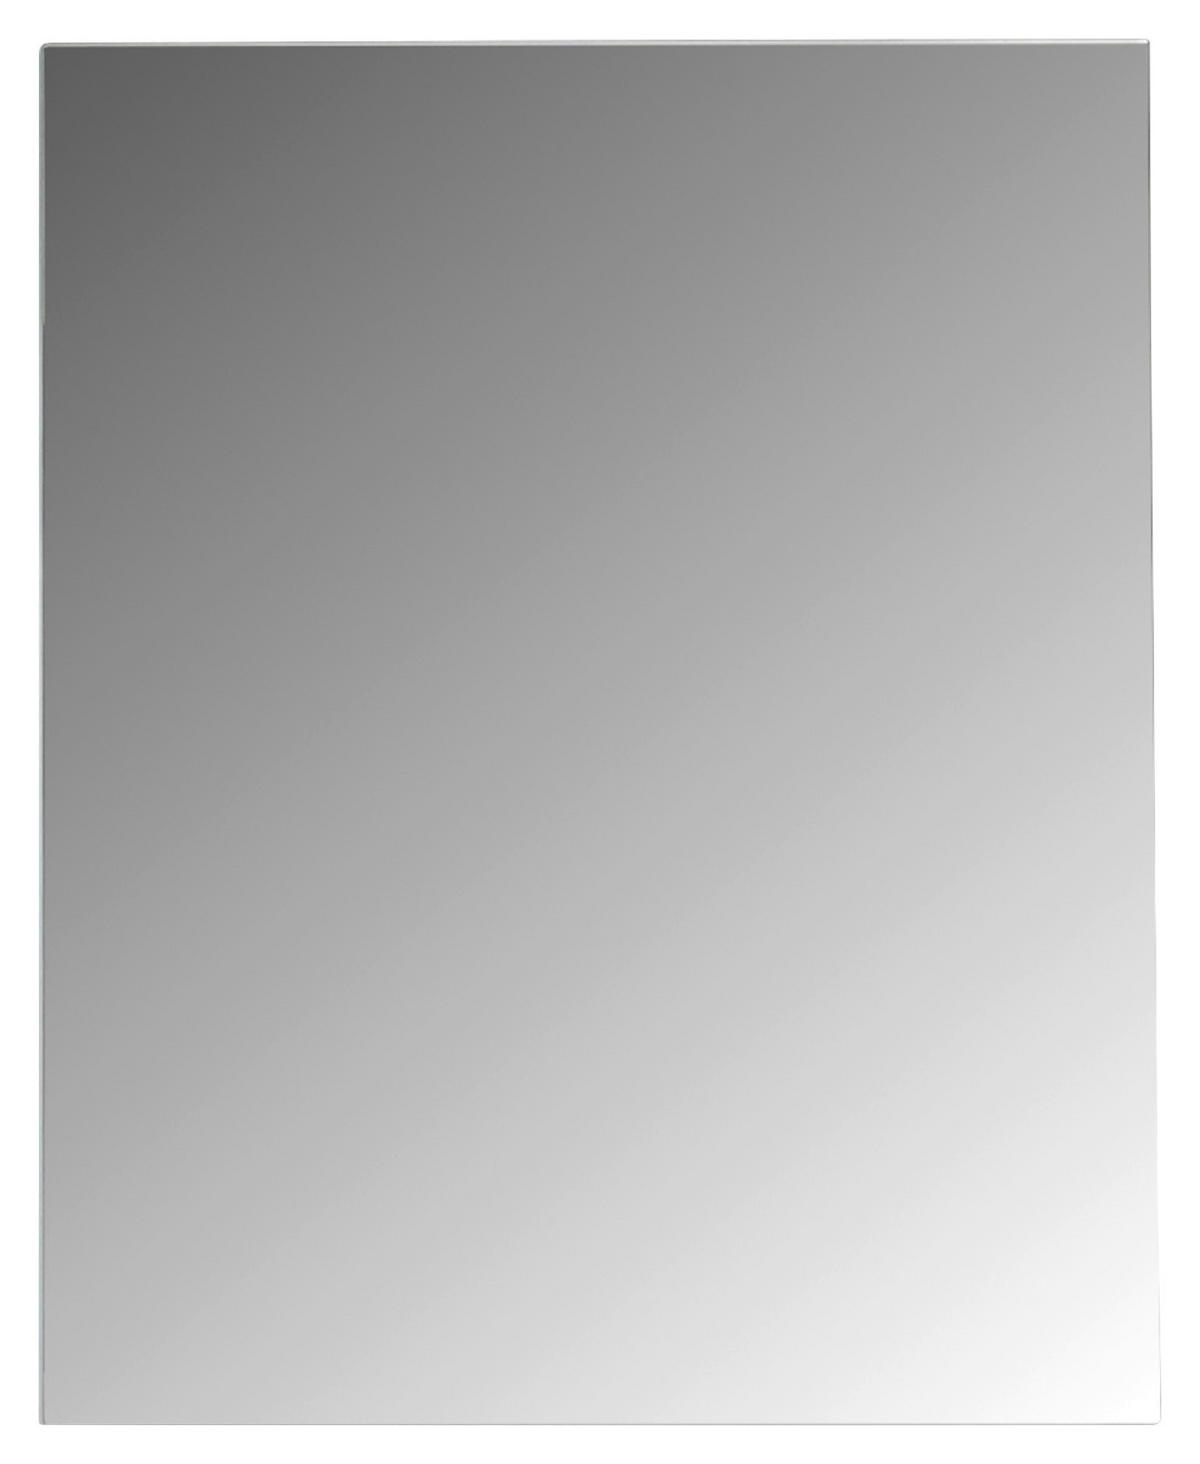 WANDSPIEGEL 70/90/2 cm    - Basics, Glas/Holzwerkstoff (70/90/2cm) - Xora